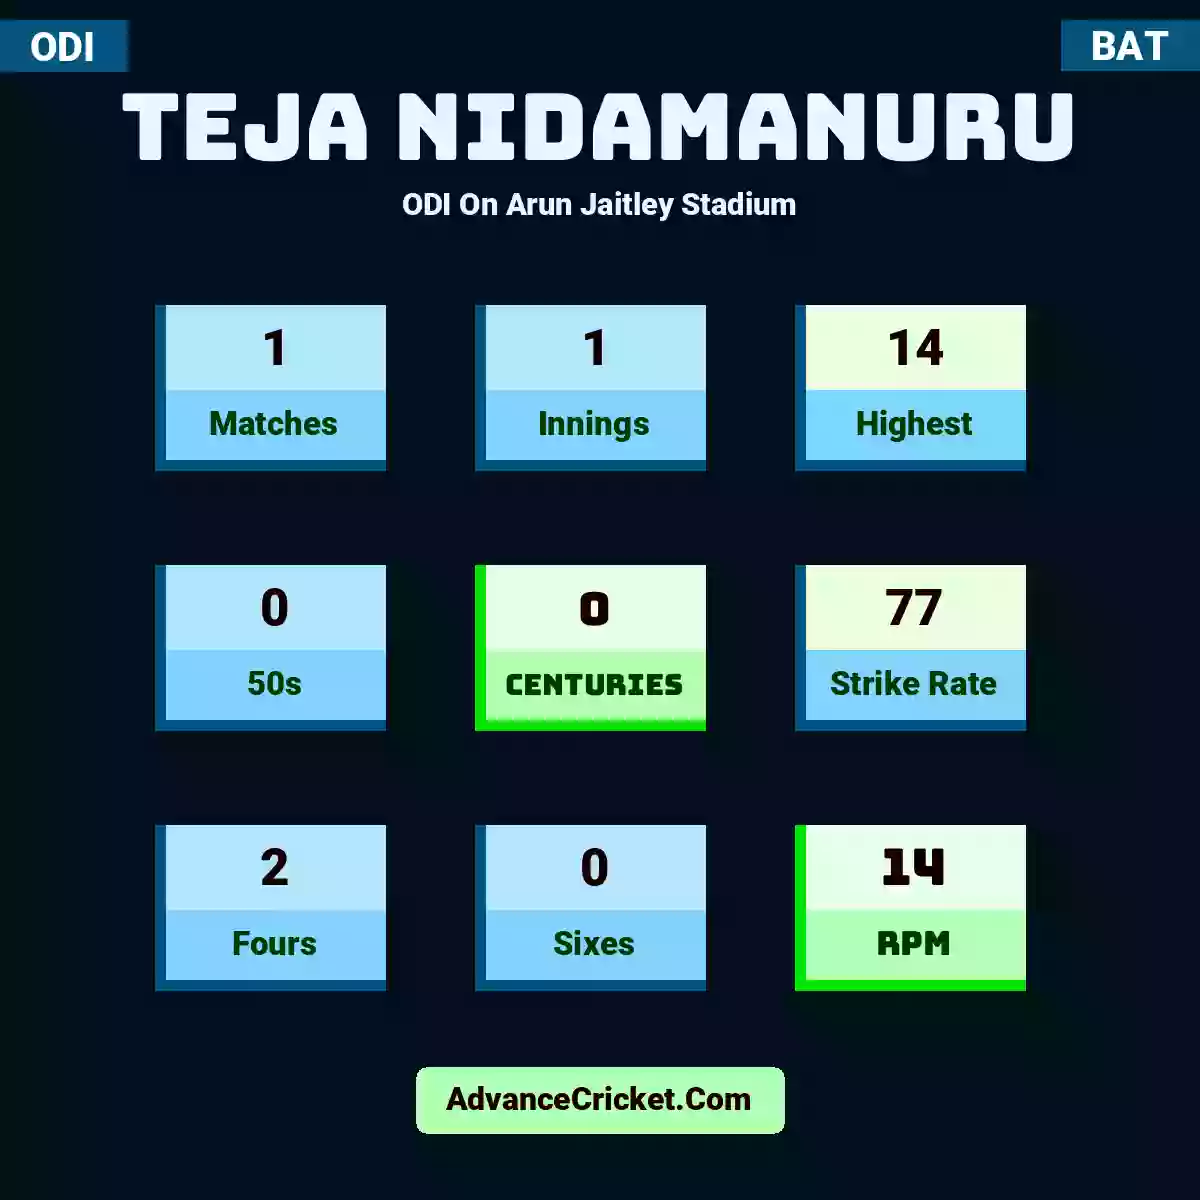 Teja Nidamanuru ODI  On Arun Jaitley Stadium, Teja Nidamanuru played 1 matches, scored 14 runs as highest, 0 half-centuries, and 0 centuries, with a strike rate of 77. T.Nidamanuru hit 2 fours and 0 sixes, with an RPM of 14.